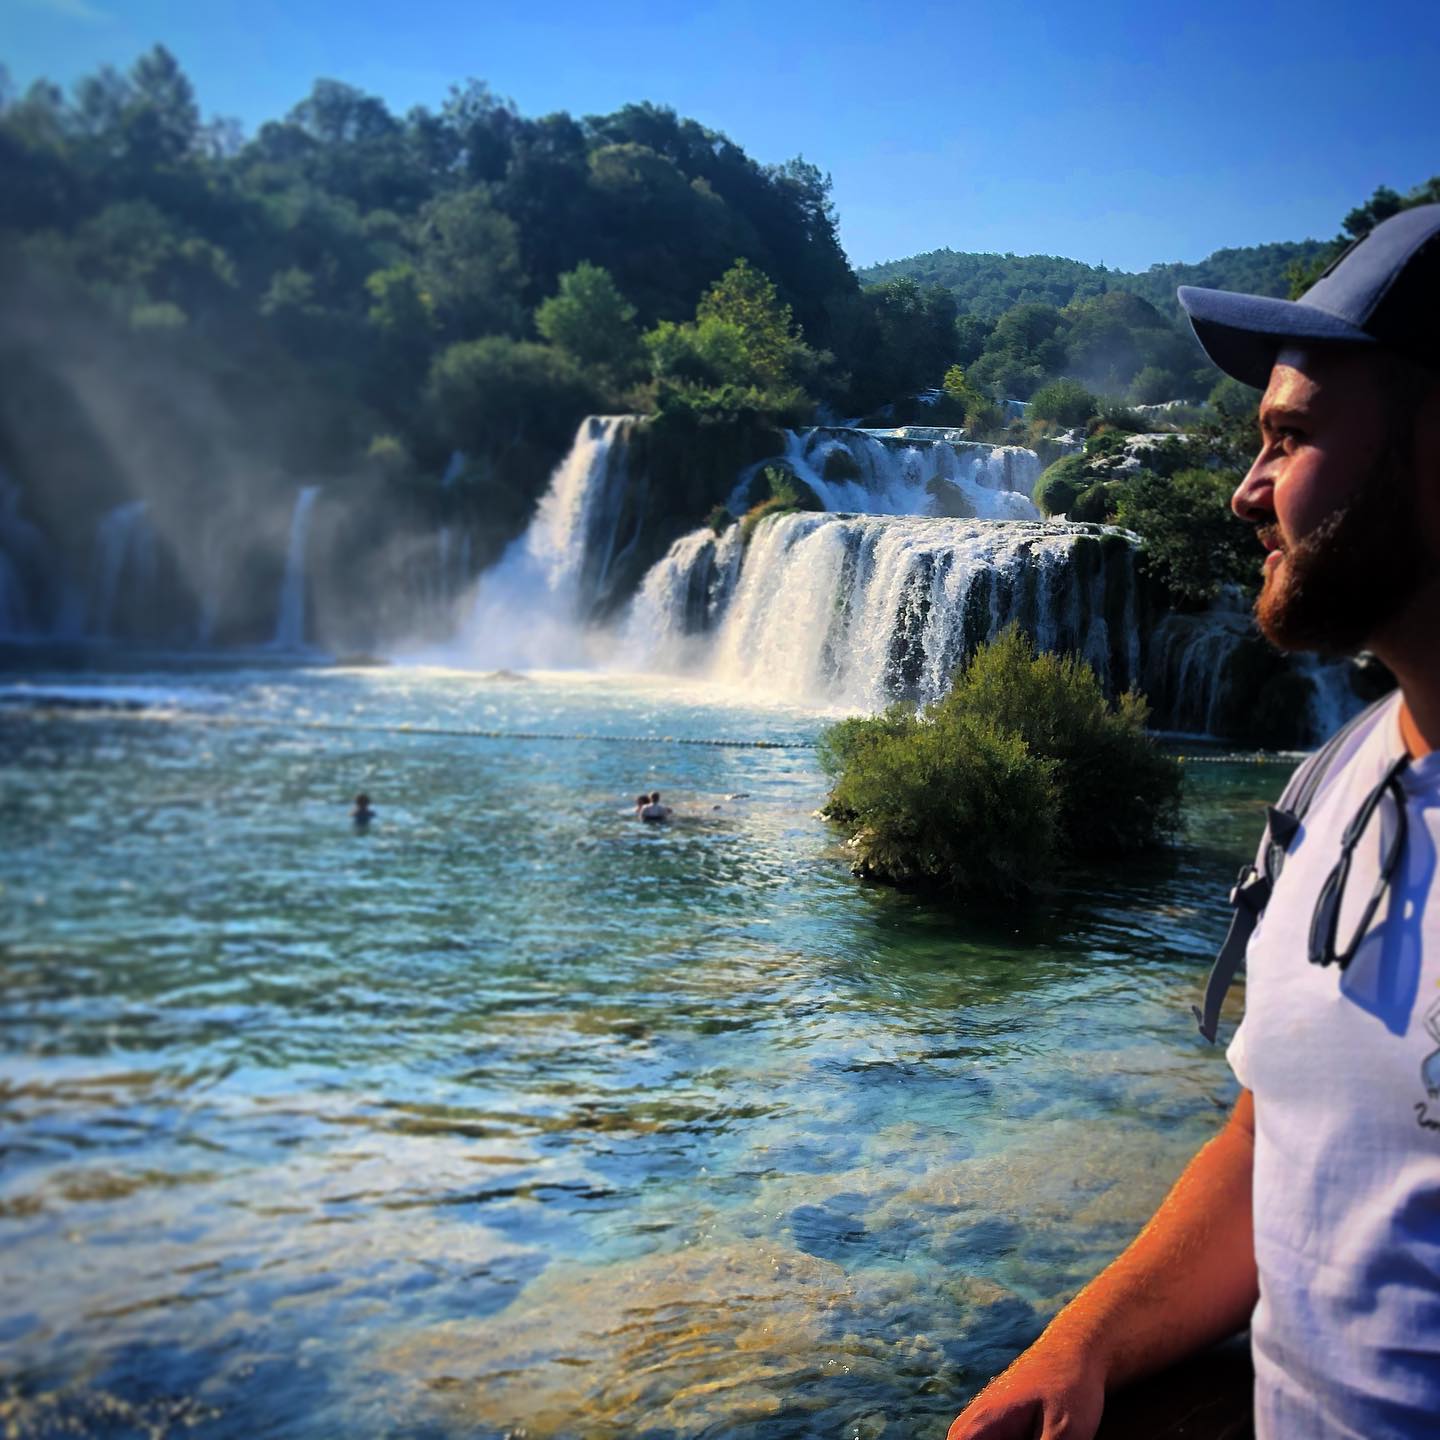 Make your own happiness
•
•
•
#love #instagood #photooftheday #beautiful #happy #cute #tbt #like4like #pic #selfie #summer #friends #repost #nature #fun #style #smile #croatia #dubrovnik #nationalpark #split #zadar #bosnia #skradin #thejollygringo